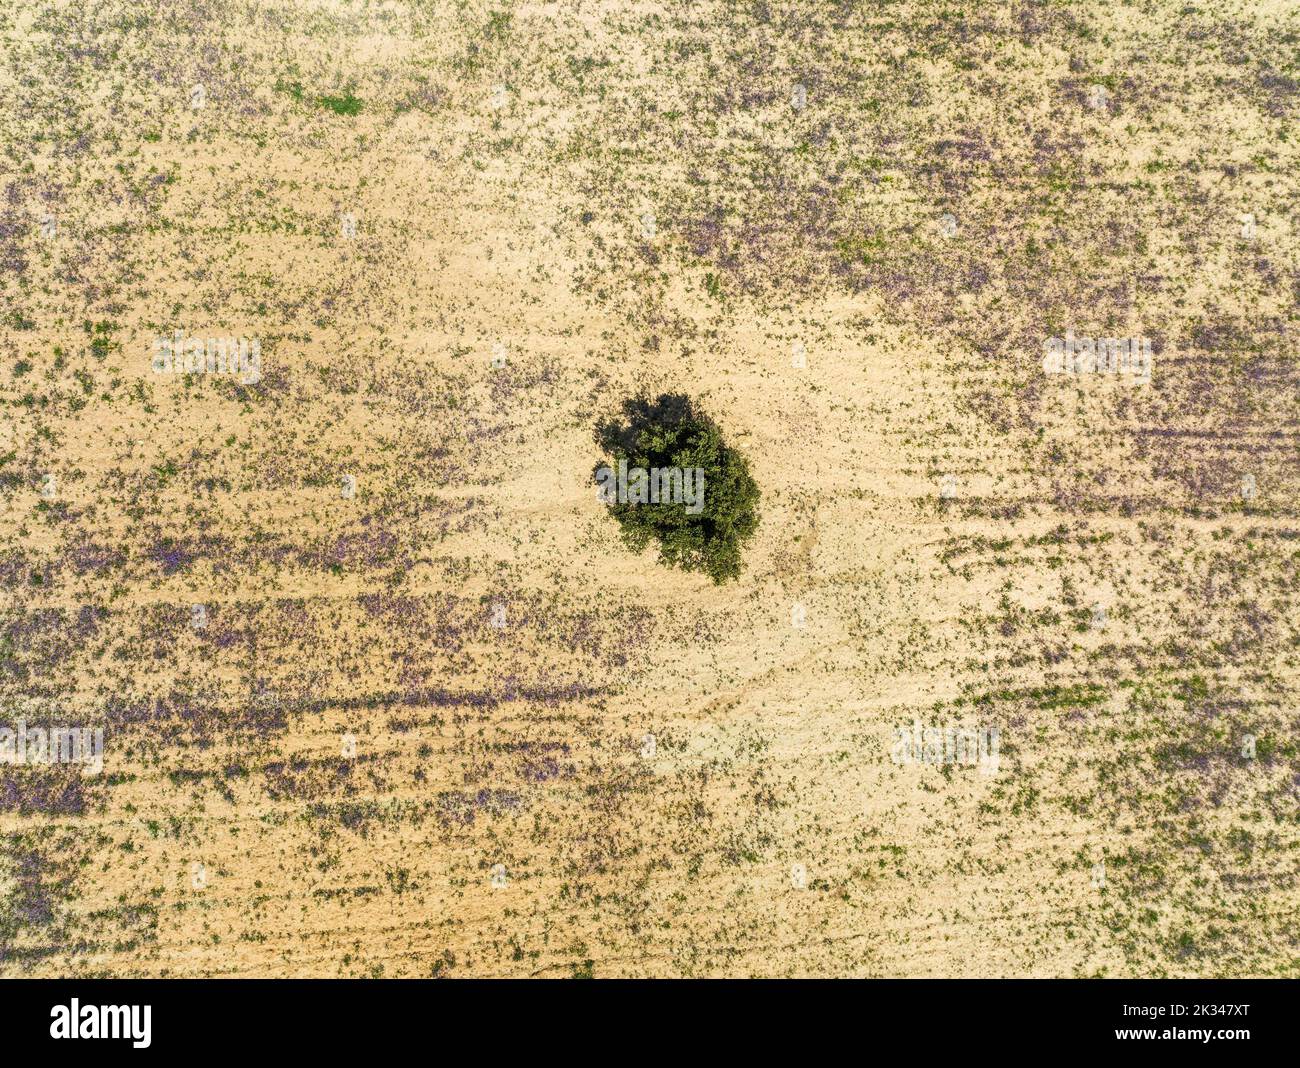 Holm Oak (Quercus ilex) in a field, aerial view, drone shot, Almeria province, Andalusia, Spain Stock Photo